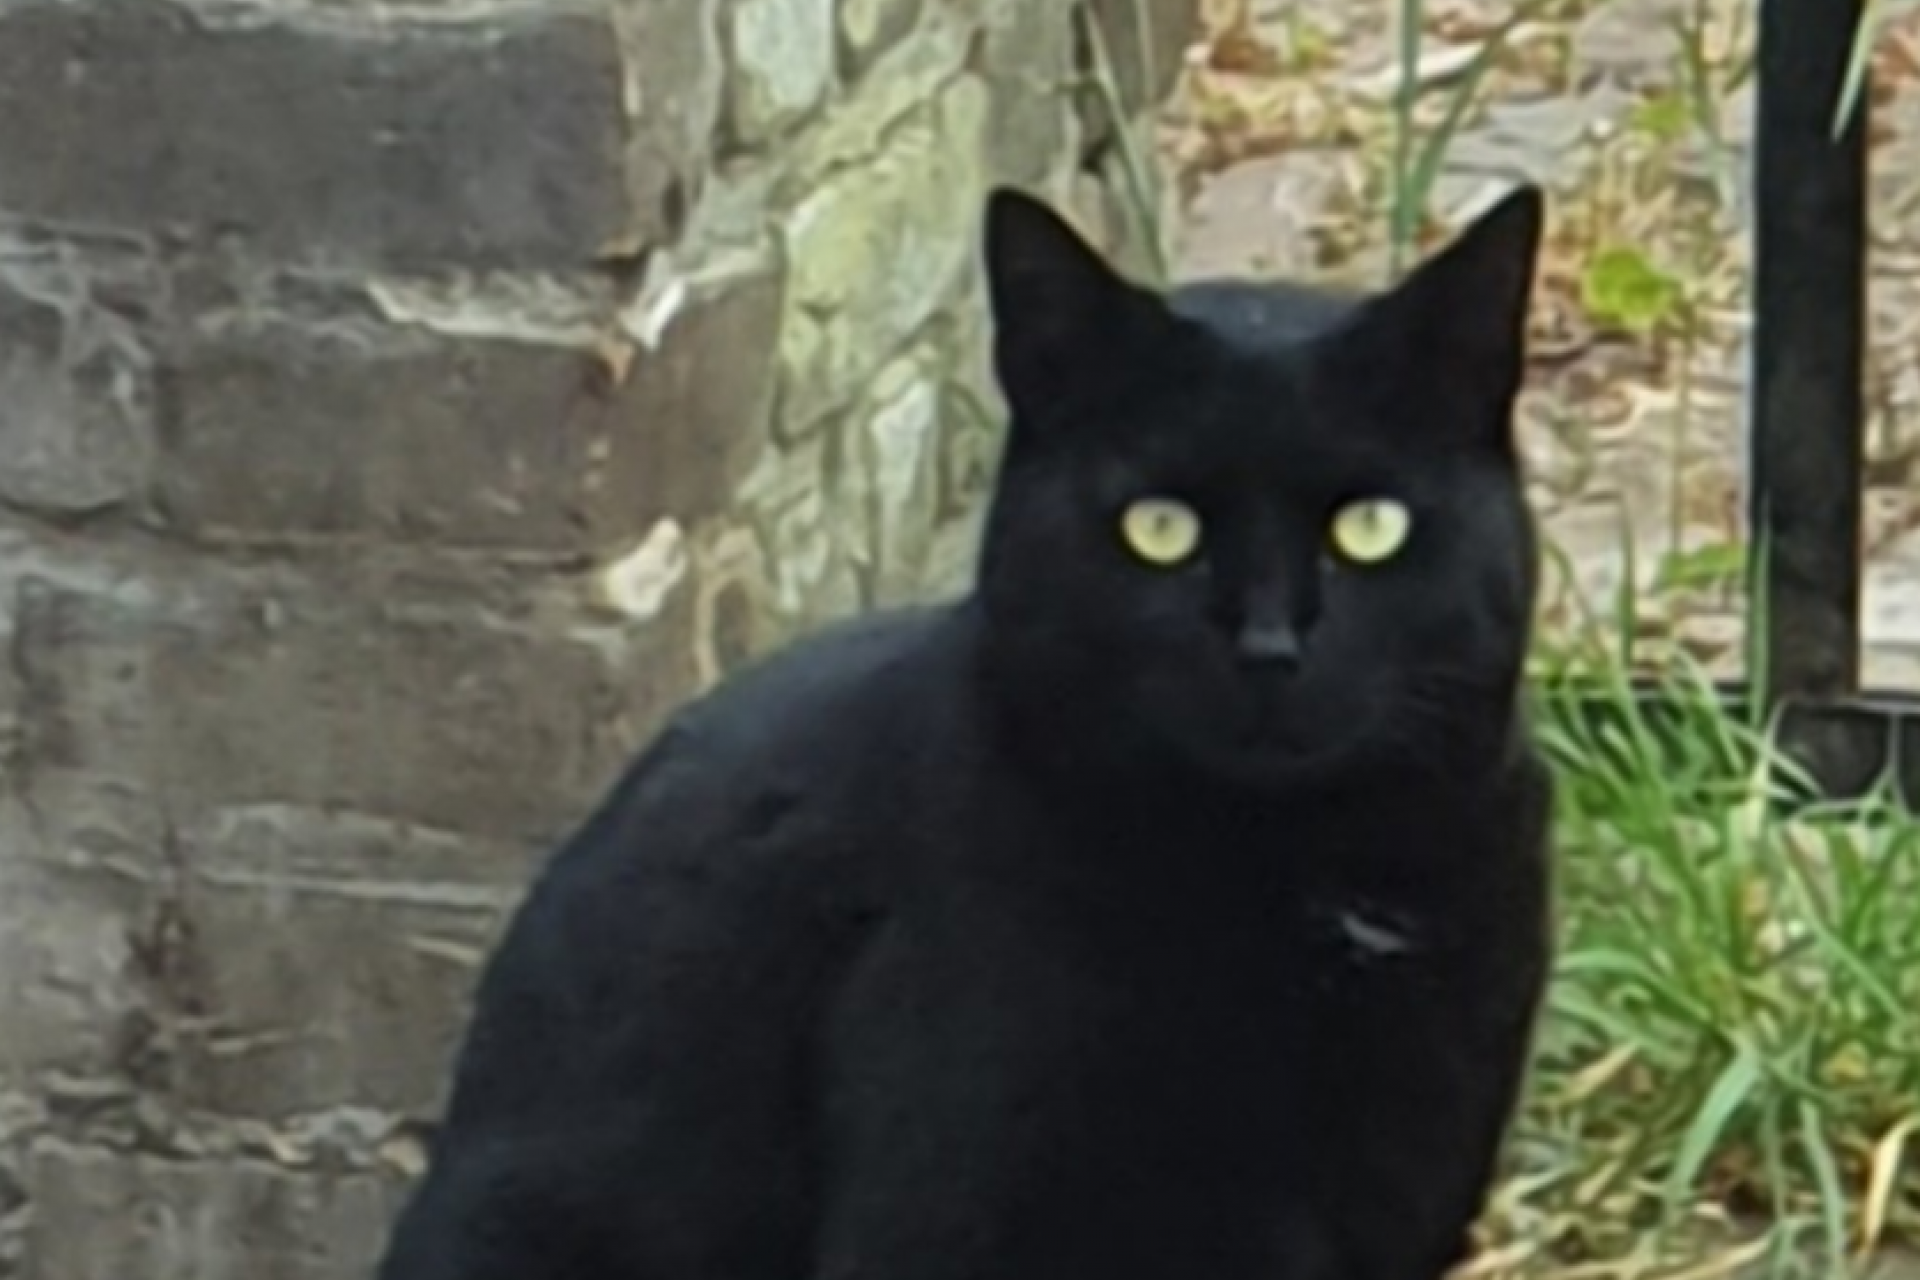 Zwarte poes, kat, omgeving centrum Doesburg. Vermist vanaf 20-08-2020